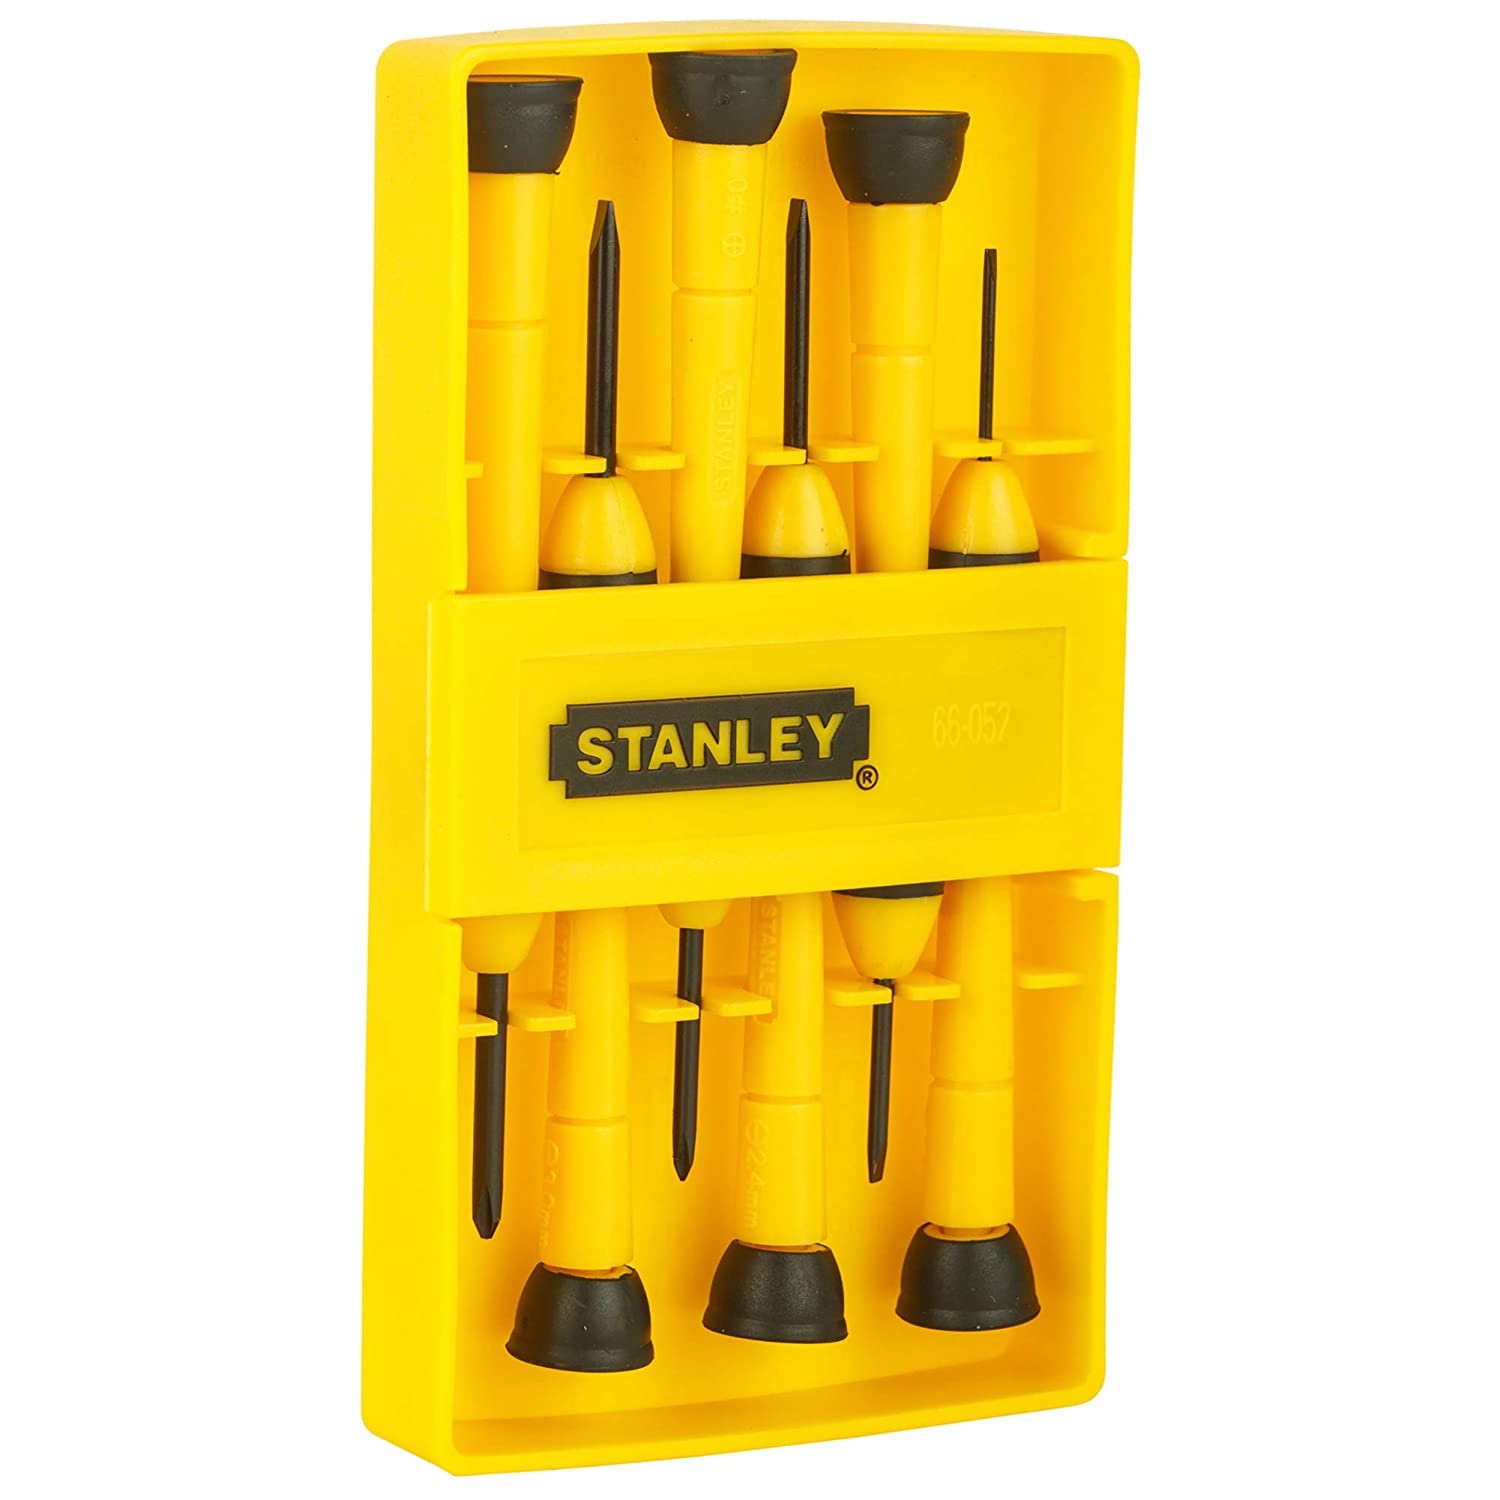 STANLEY 66-052 Bi Material Handle Precision Screwdriver Set (6 Piece)